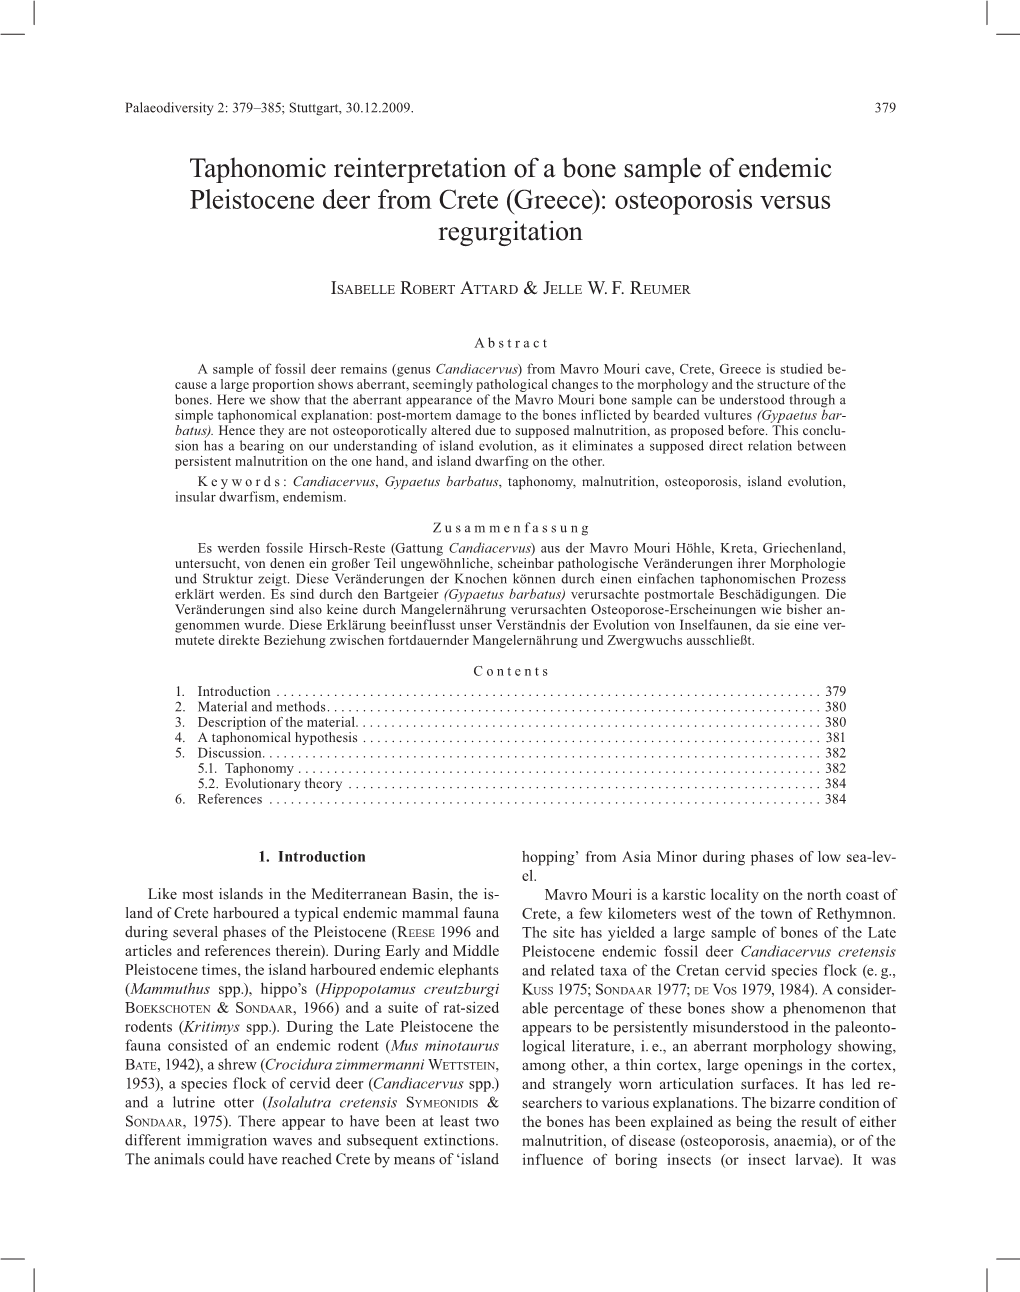 Taphonomic Reinterpretation of a Bone Sample of Endemic Pleistocene Deer from Crete (Greece): Osteoporosis Versus Regurgitation